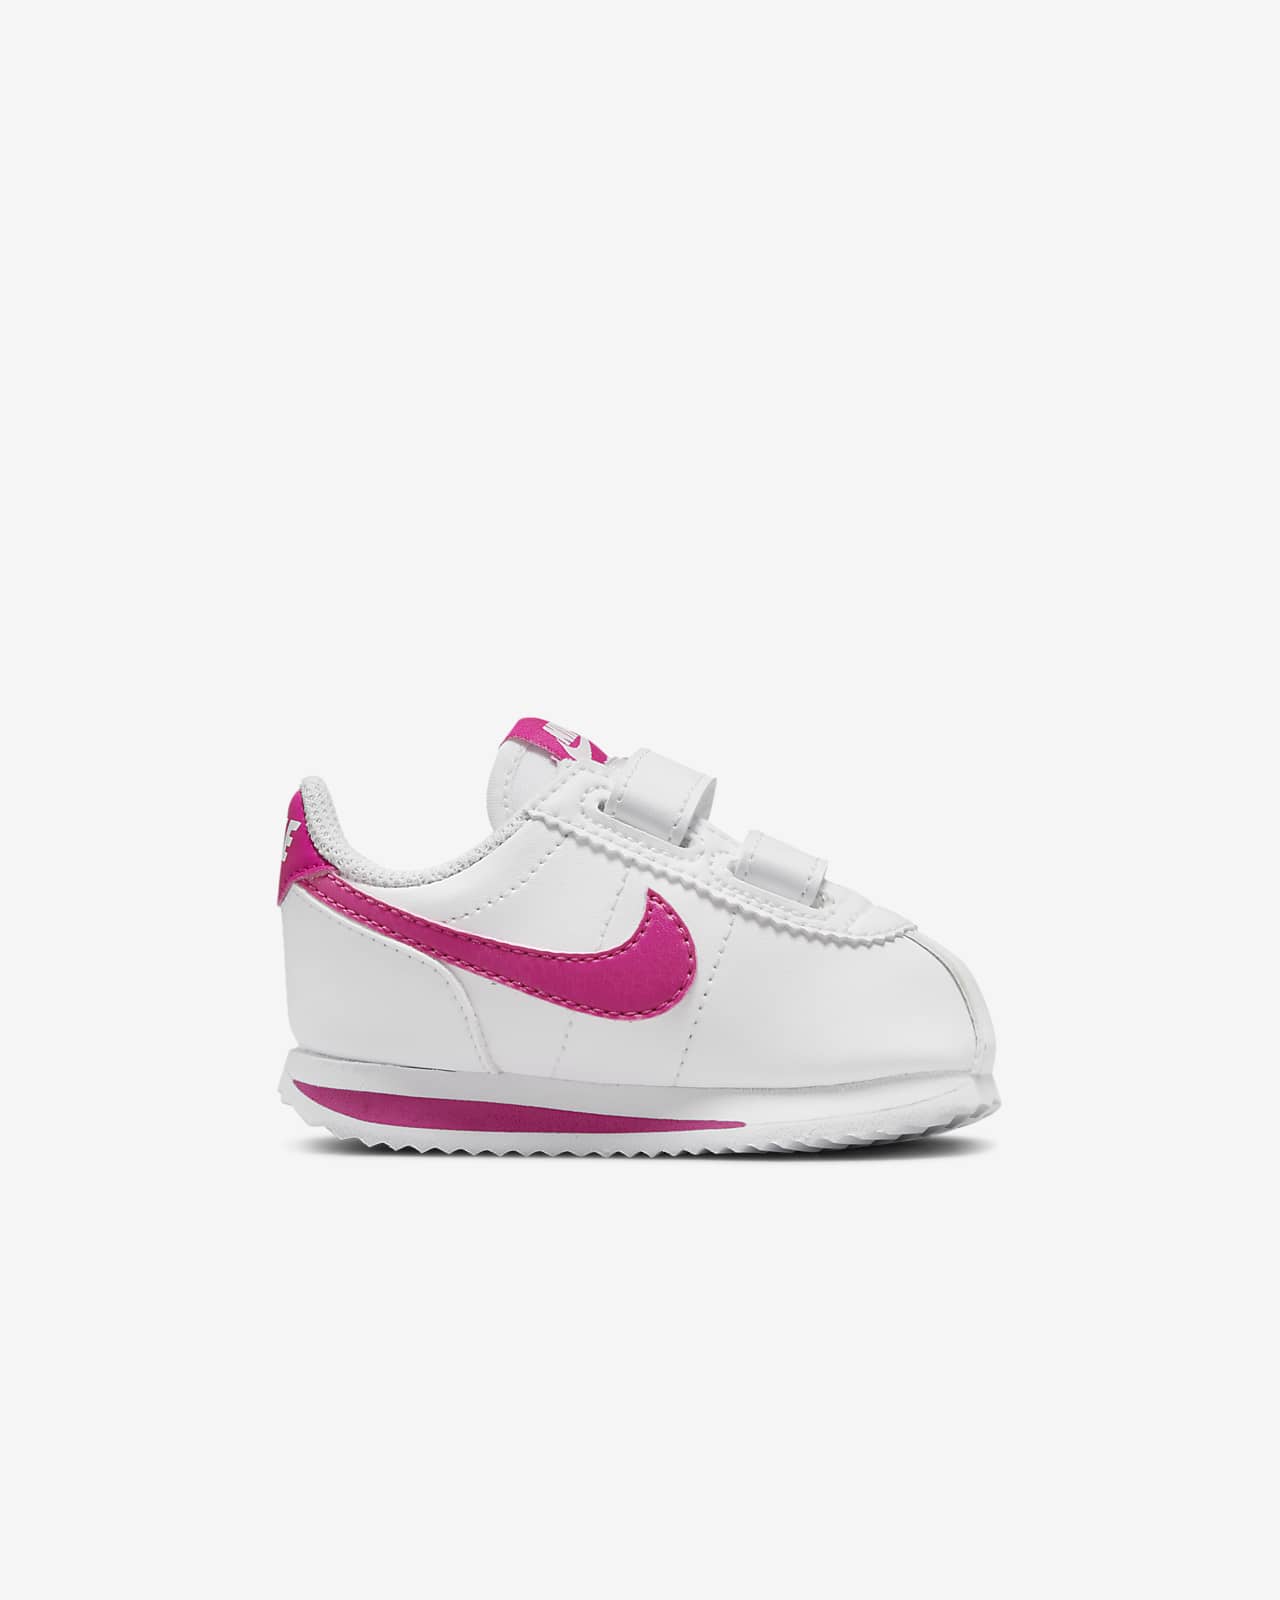 Cortez Basic SL 'White/Pink Prime' (GS) The Nike Cortez was the